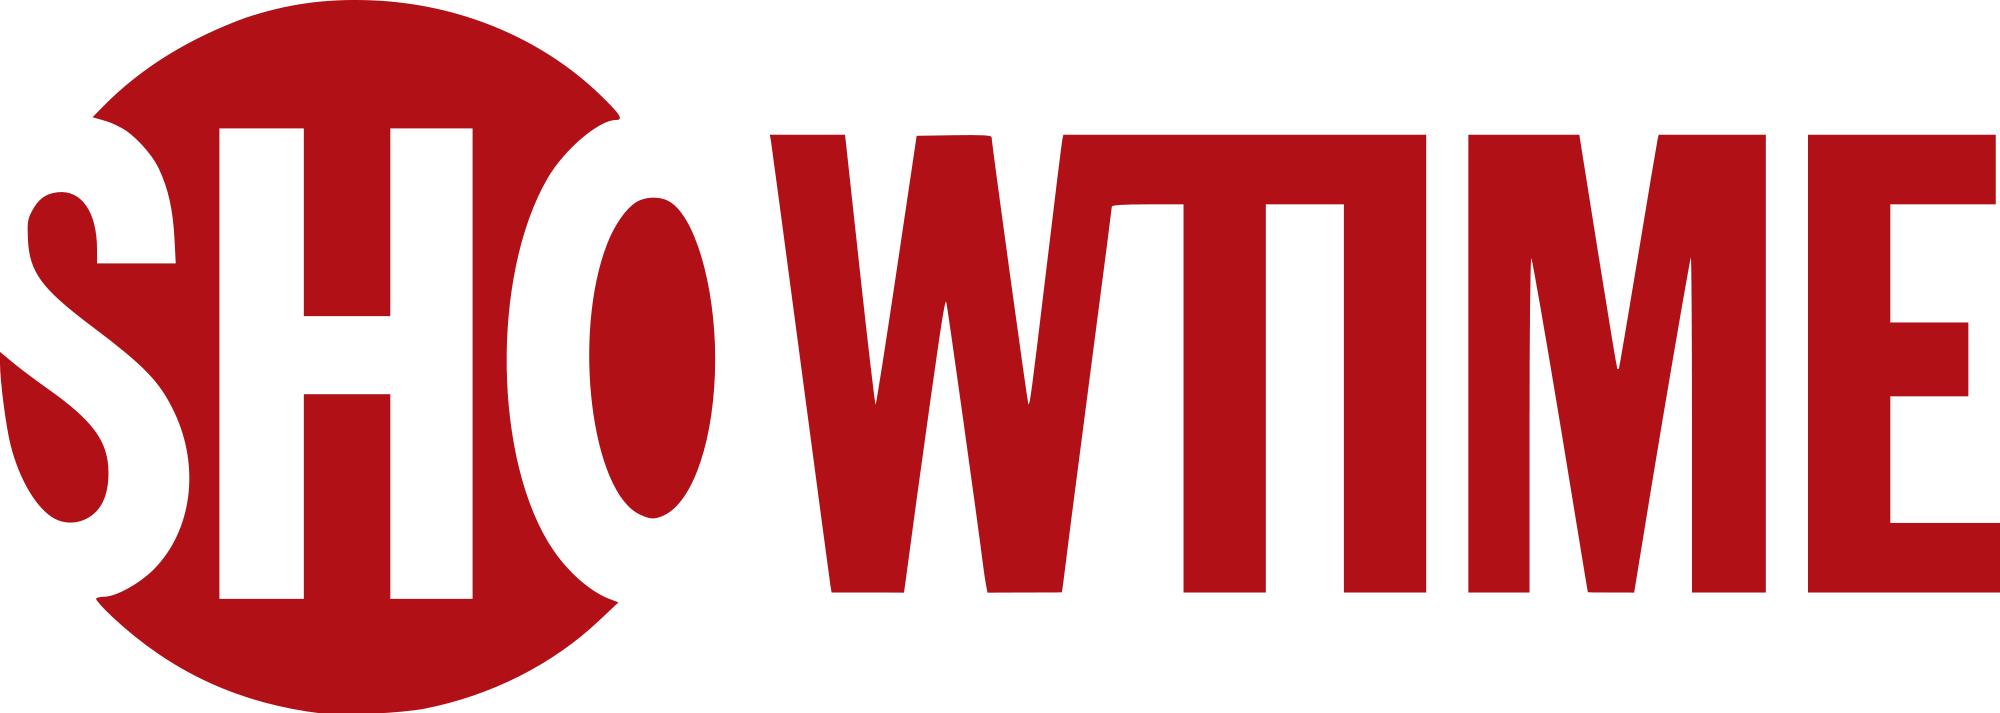 Showtime_Logo_01